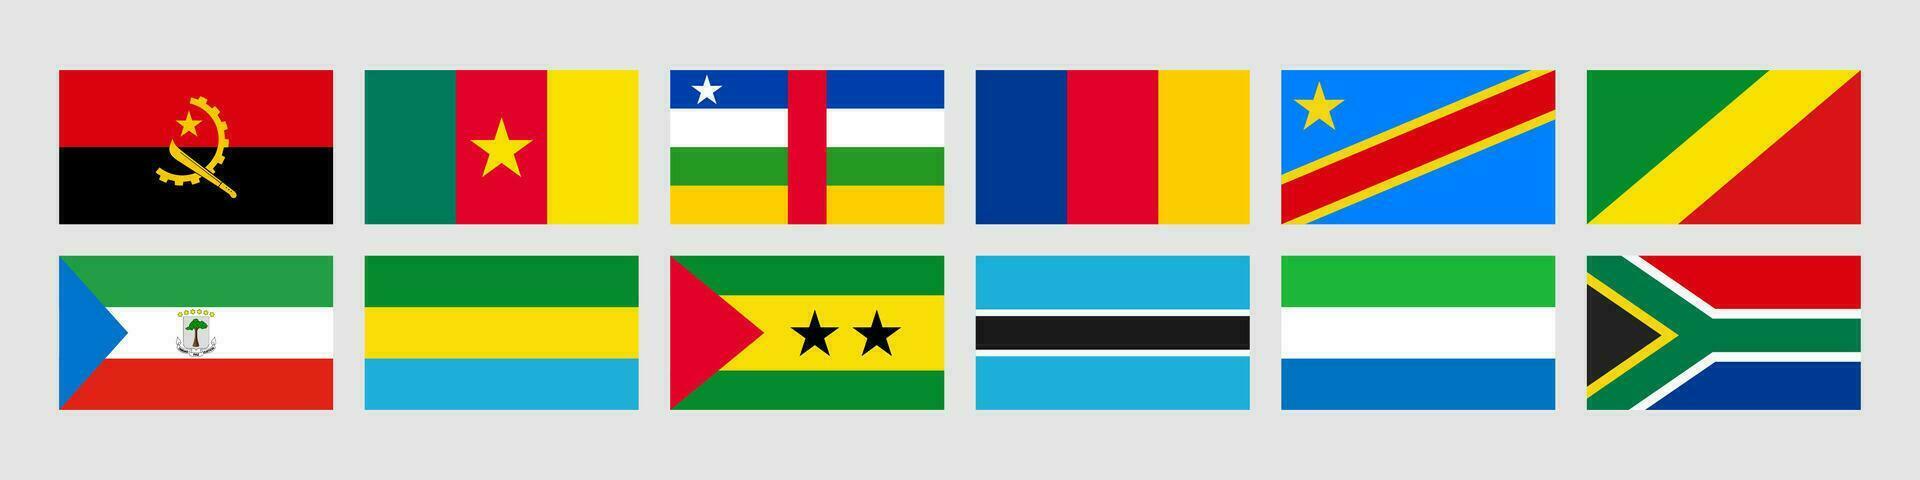 einstellen Flaggen von Mitte Afrika, Angola, Kamerun, zentral afrikanisch Republik, Tschad, Kongo, Kongo, äquatorial Guinea, Gabun, sao mir und Prinzip, Botswana, Sierra Leon, Süd Afrika vektor